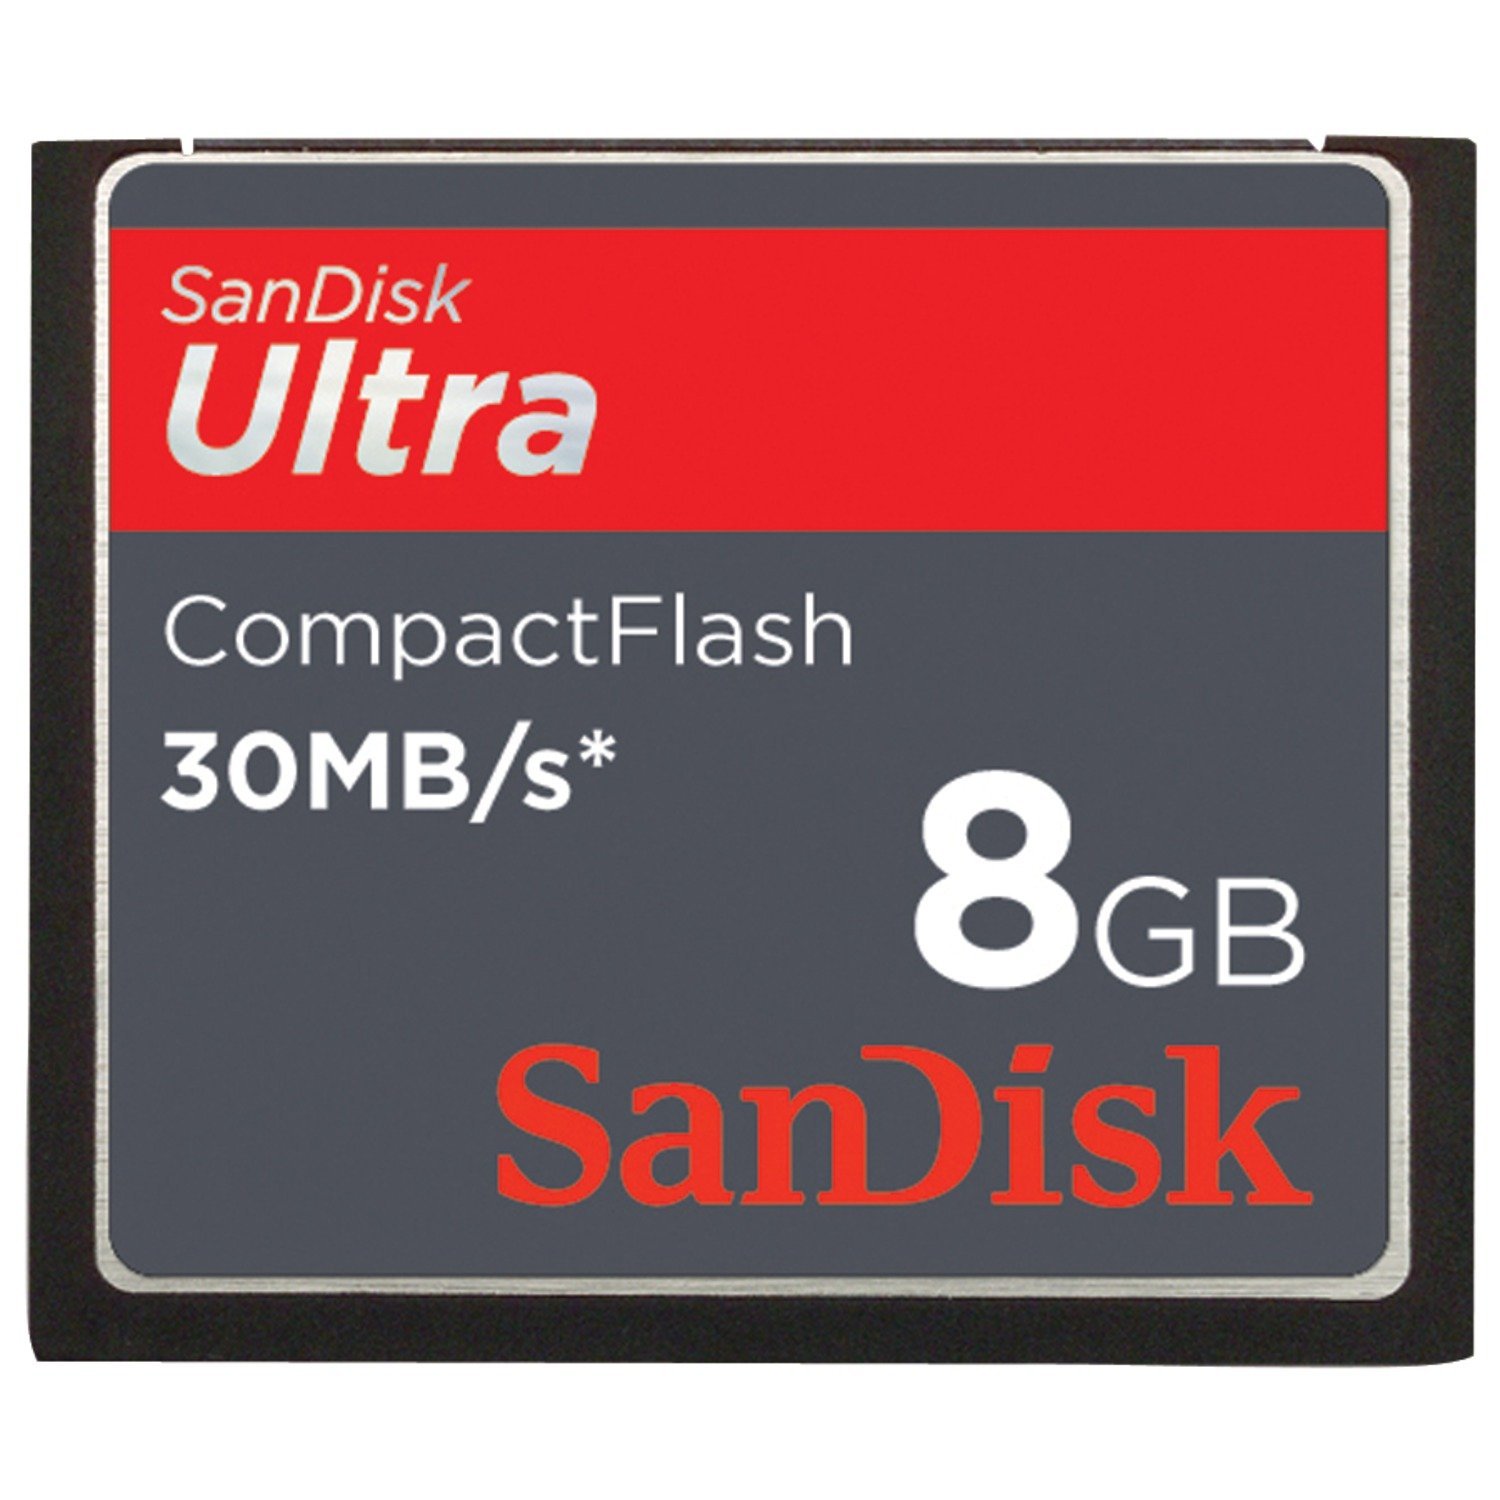 Amazon.com: SanDisk 8GB/30MB Ultra CF Card (SDCFH-008G-A11, US ...